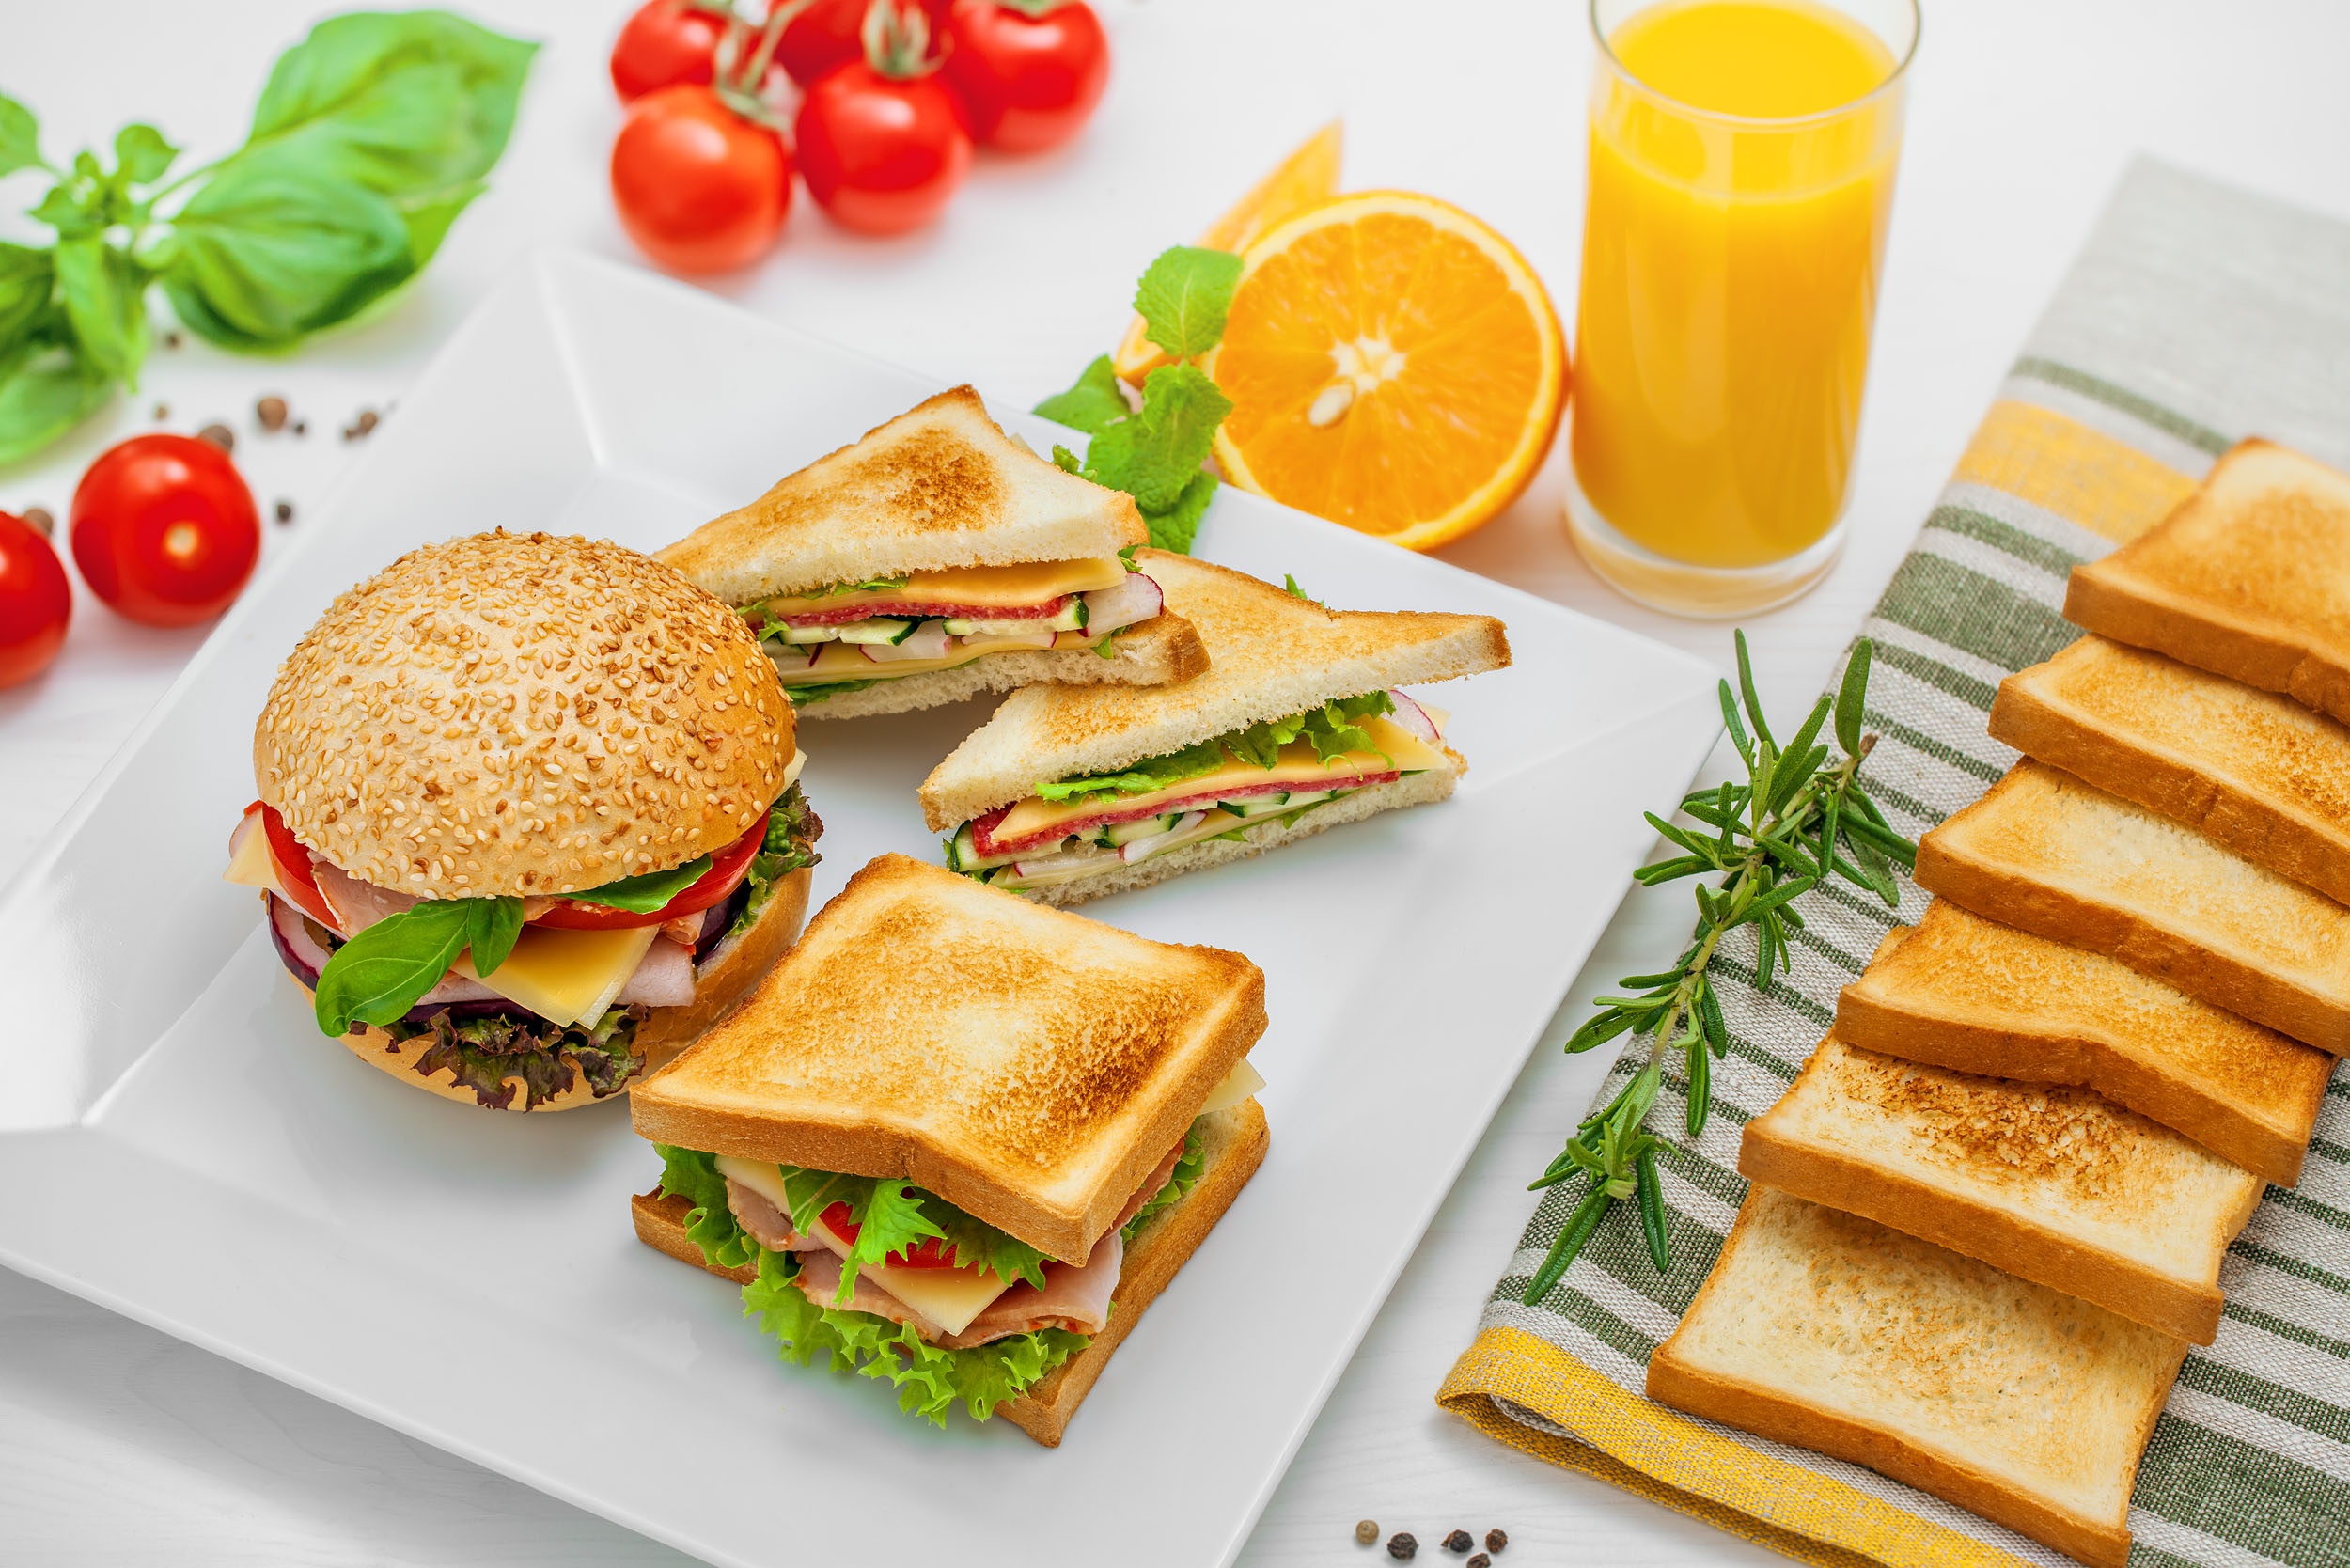 HD desktop wallpaper: Food, Still Life, Toast, Bread, Juice, Burger,  Sandwich download free picture #864560